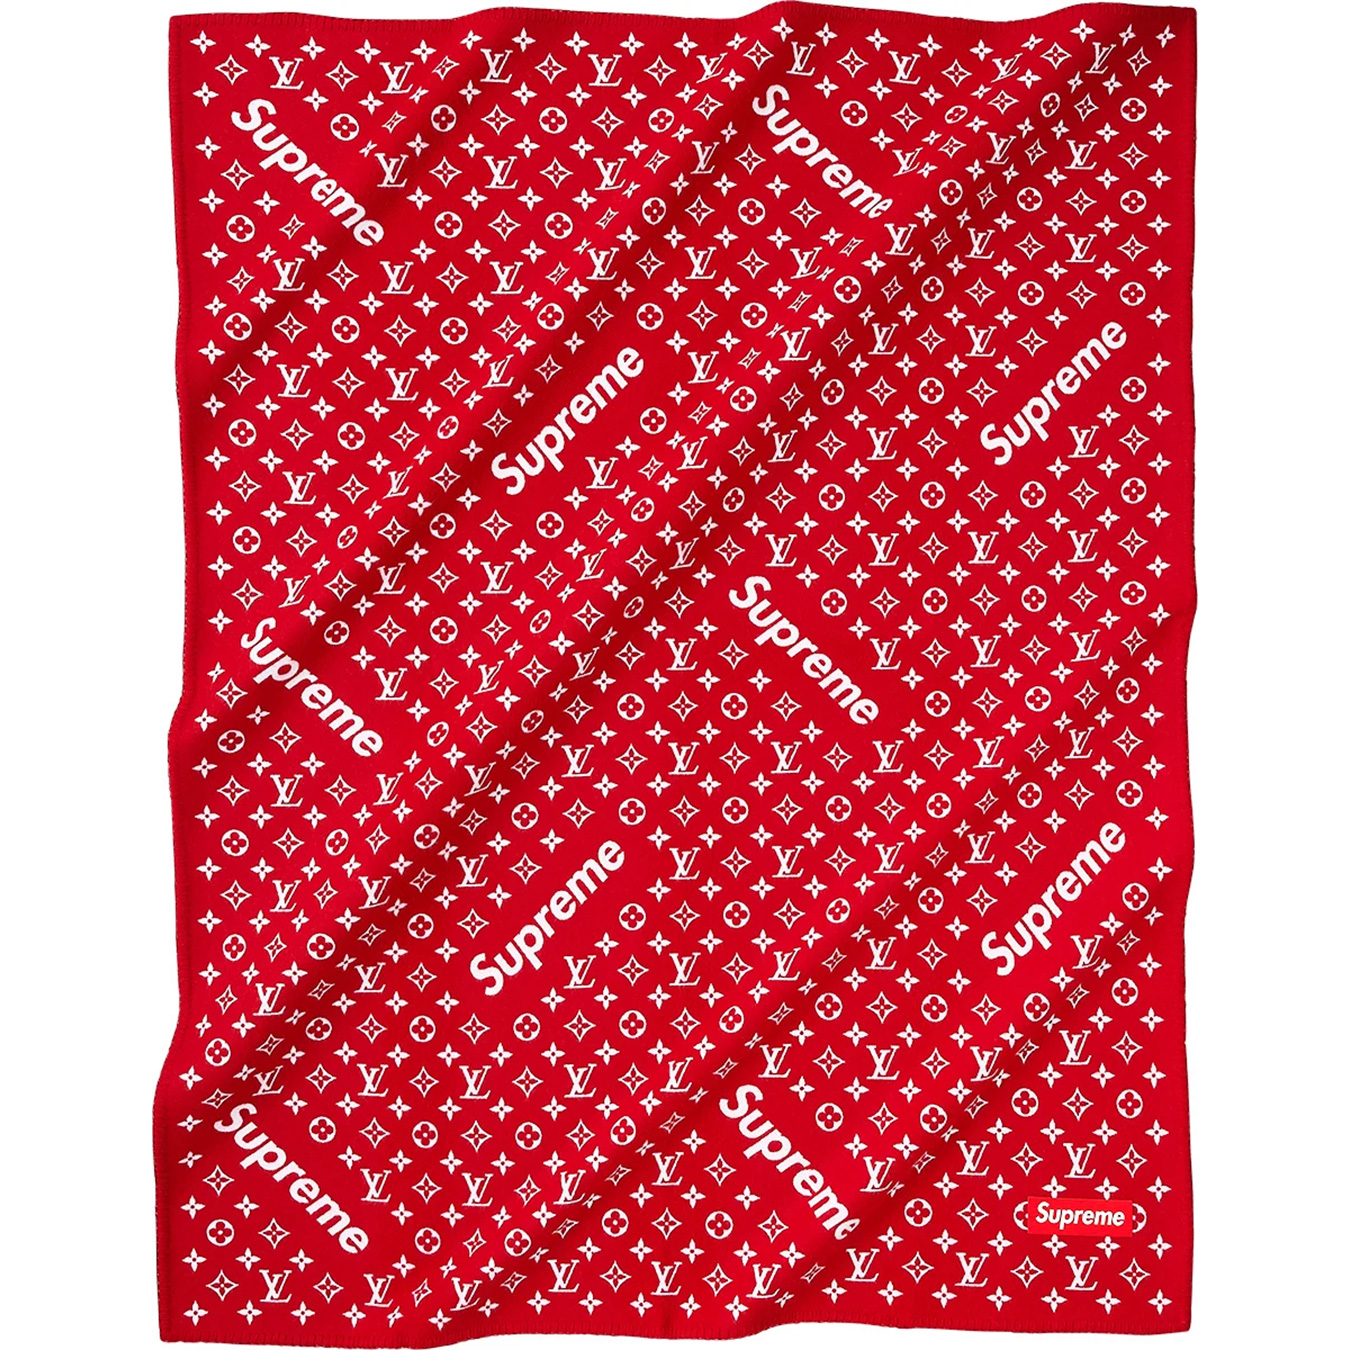 Louis Vuitton/Supreme Monogram Blanket